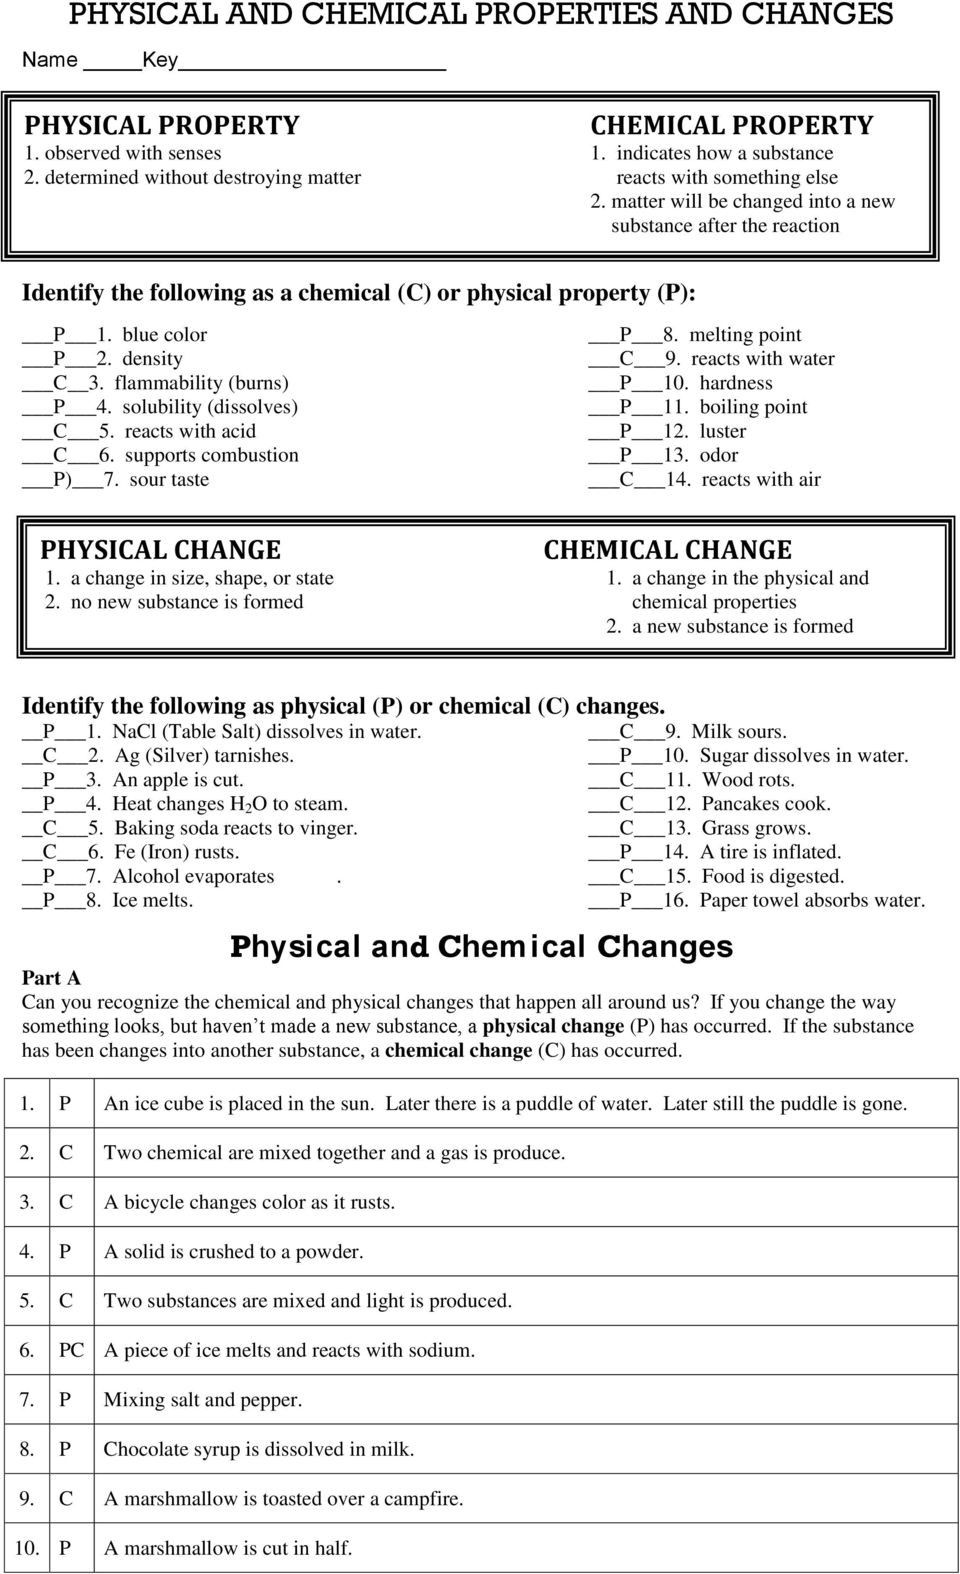 Physical Vs Chemical Properties Worksheet Physical and Chemical Properties and Changes Pdf Free Download